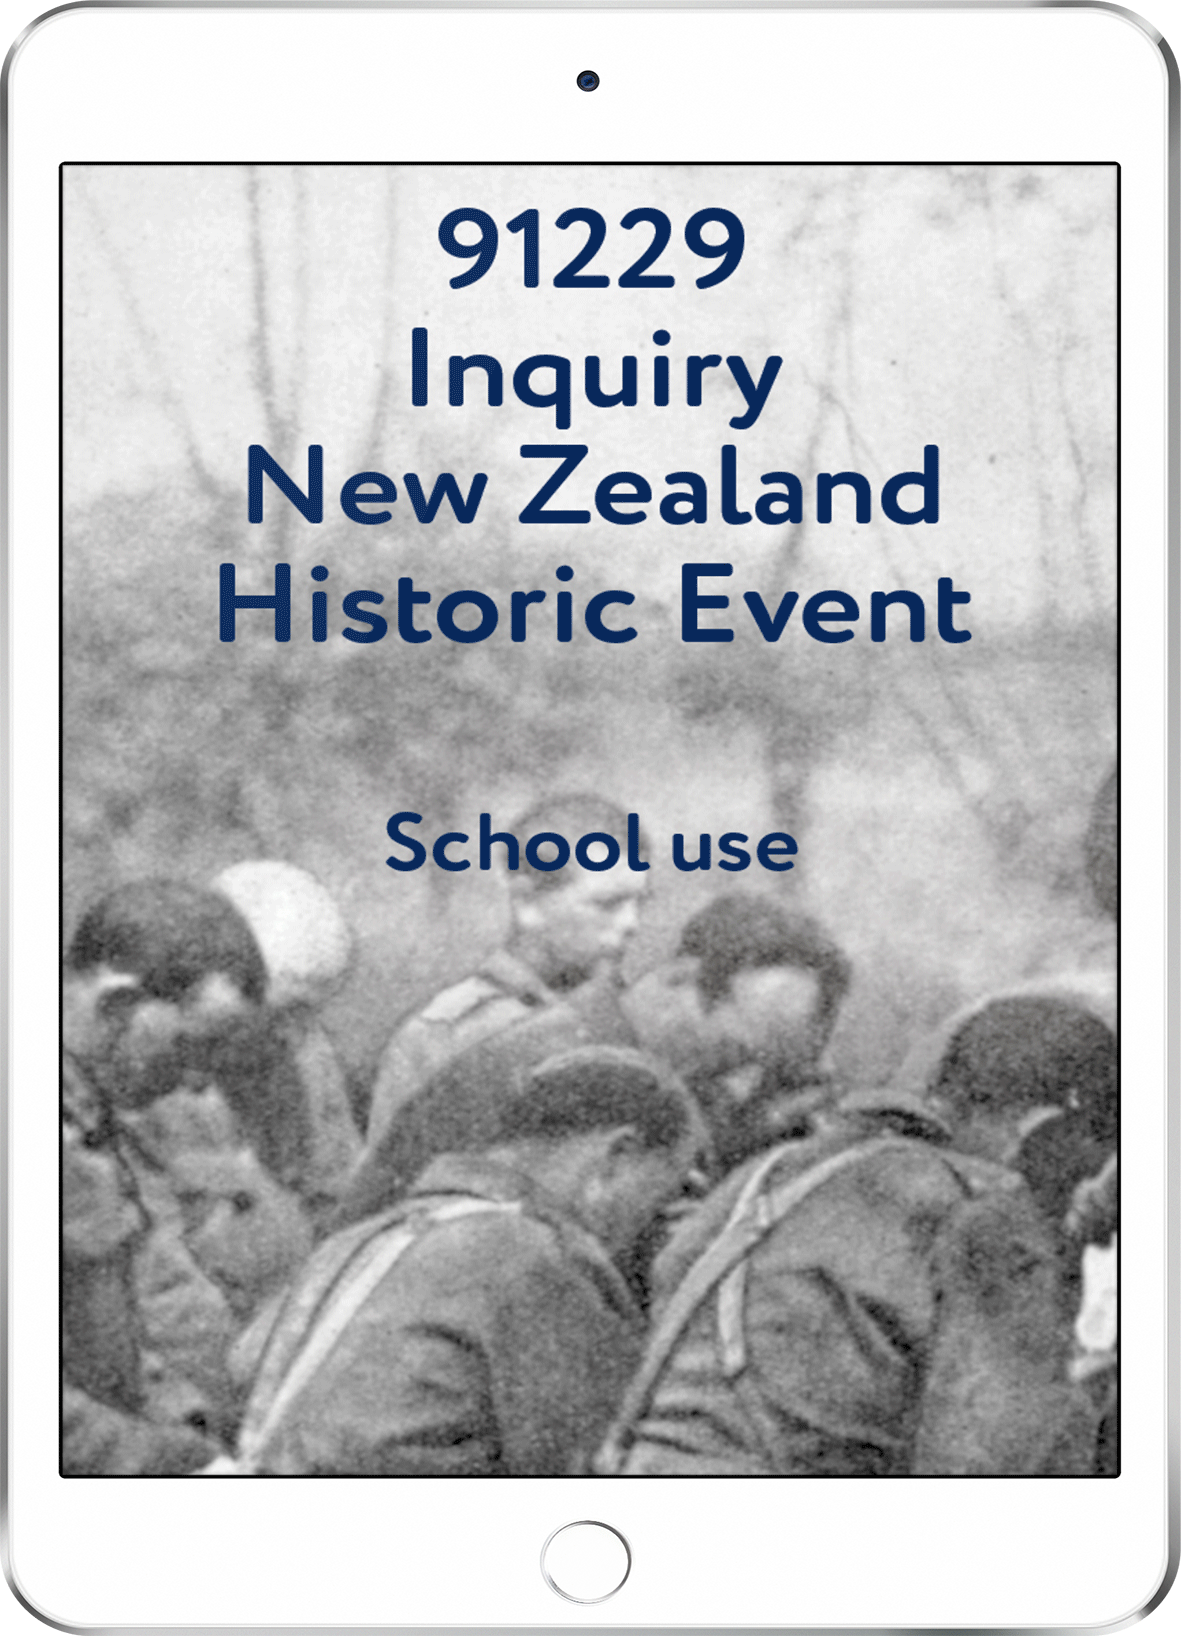 91229 Inquiry New Zealand Historic Event - School Use